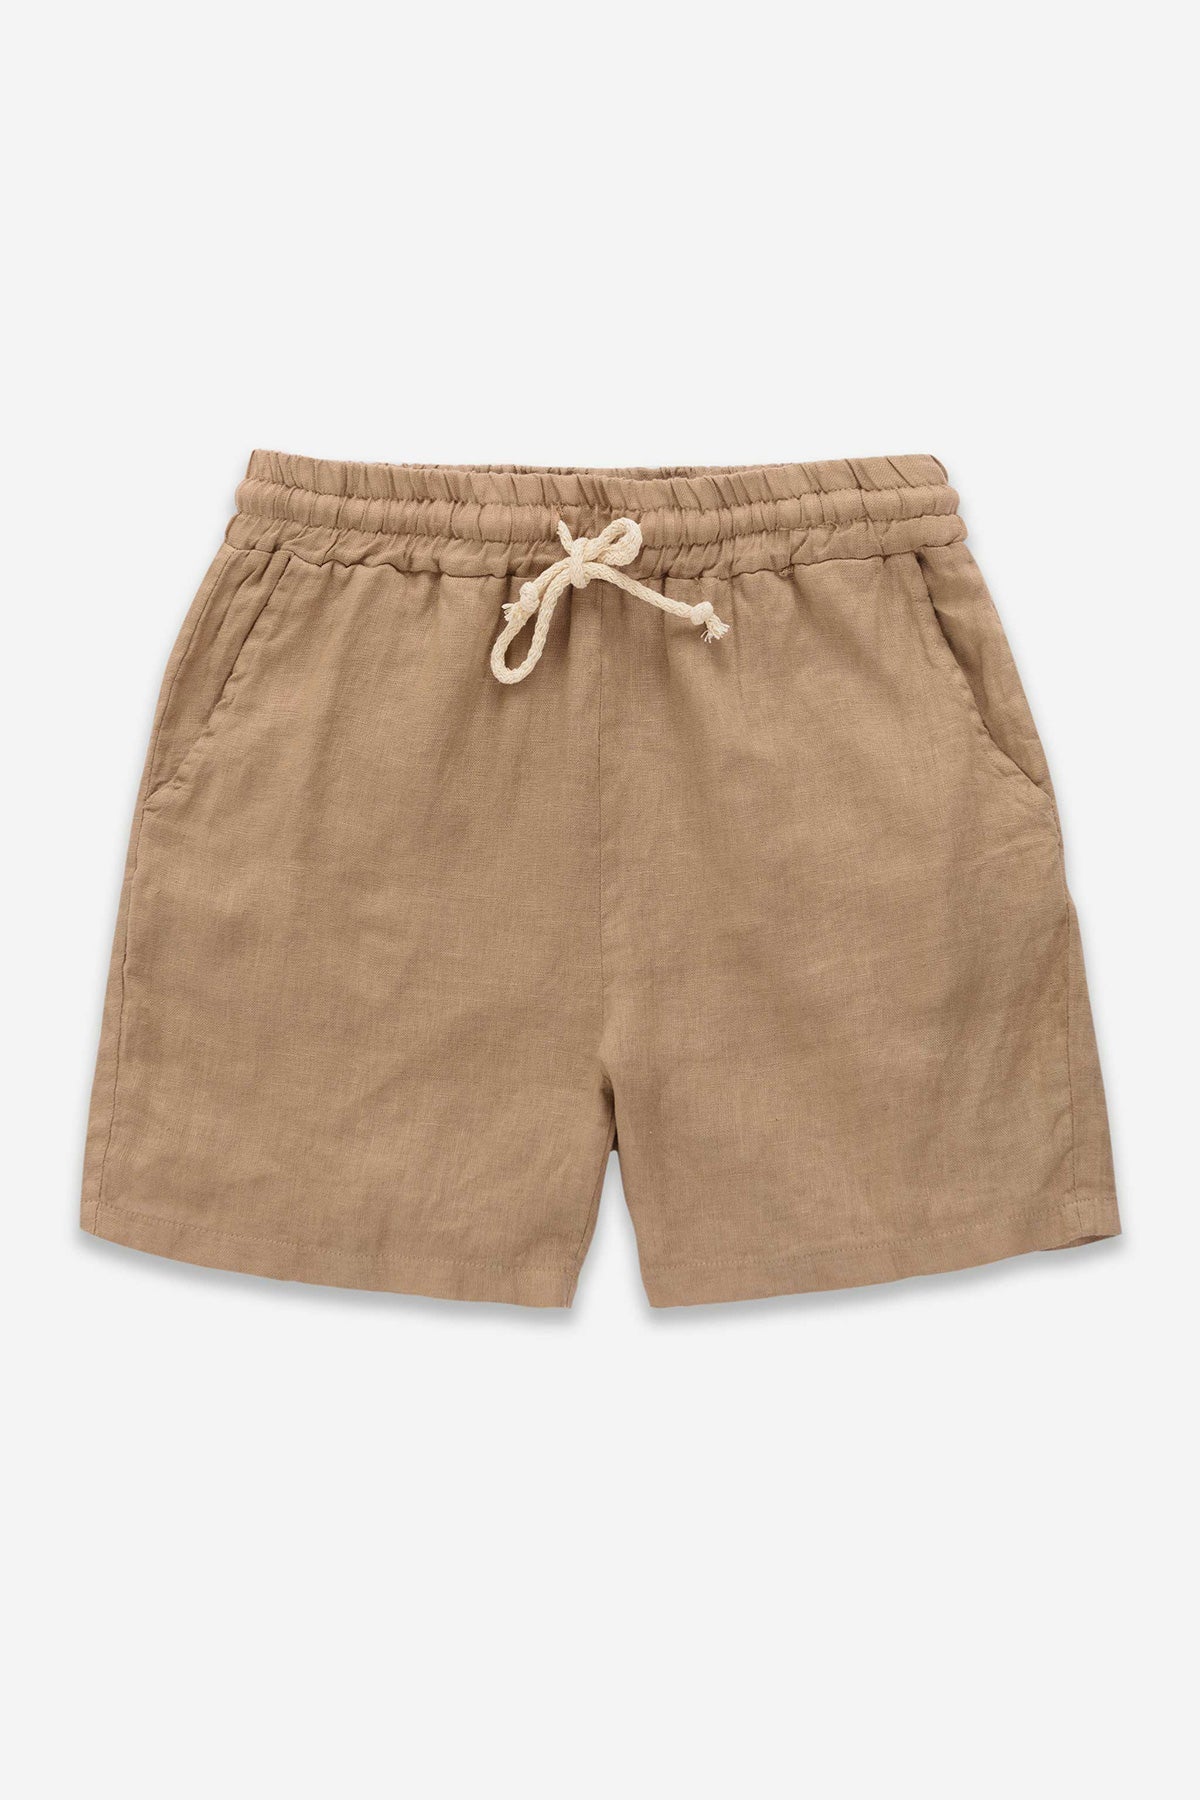 Men's linen shorts